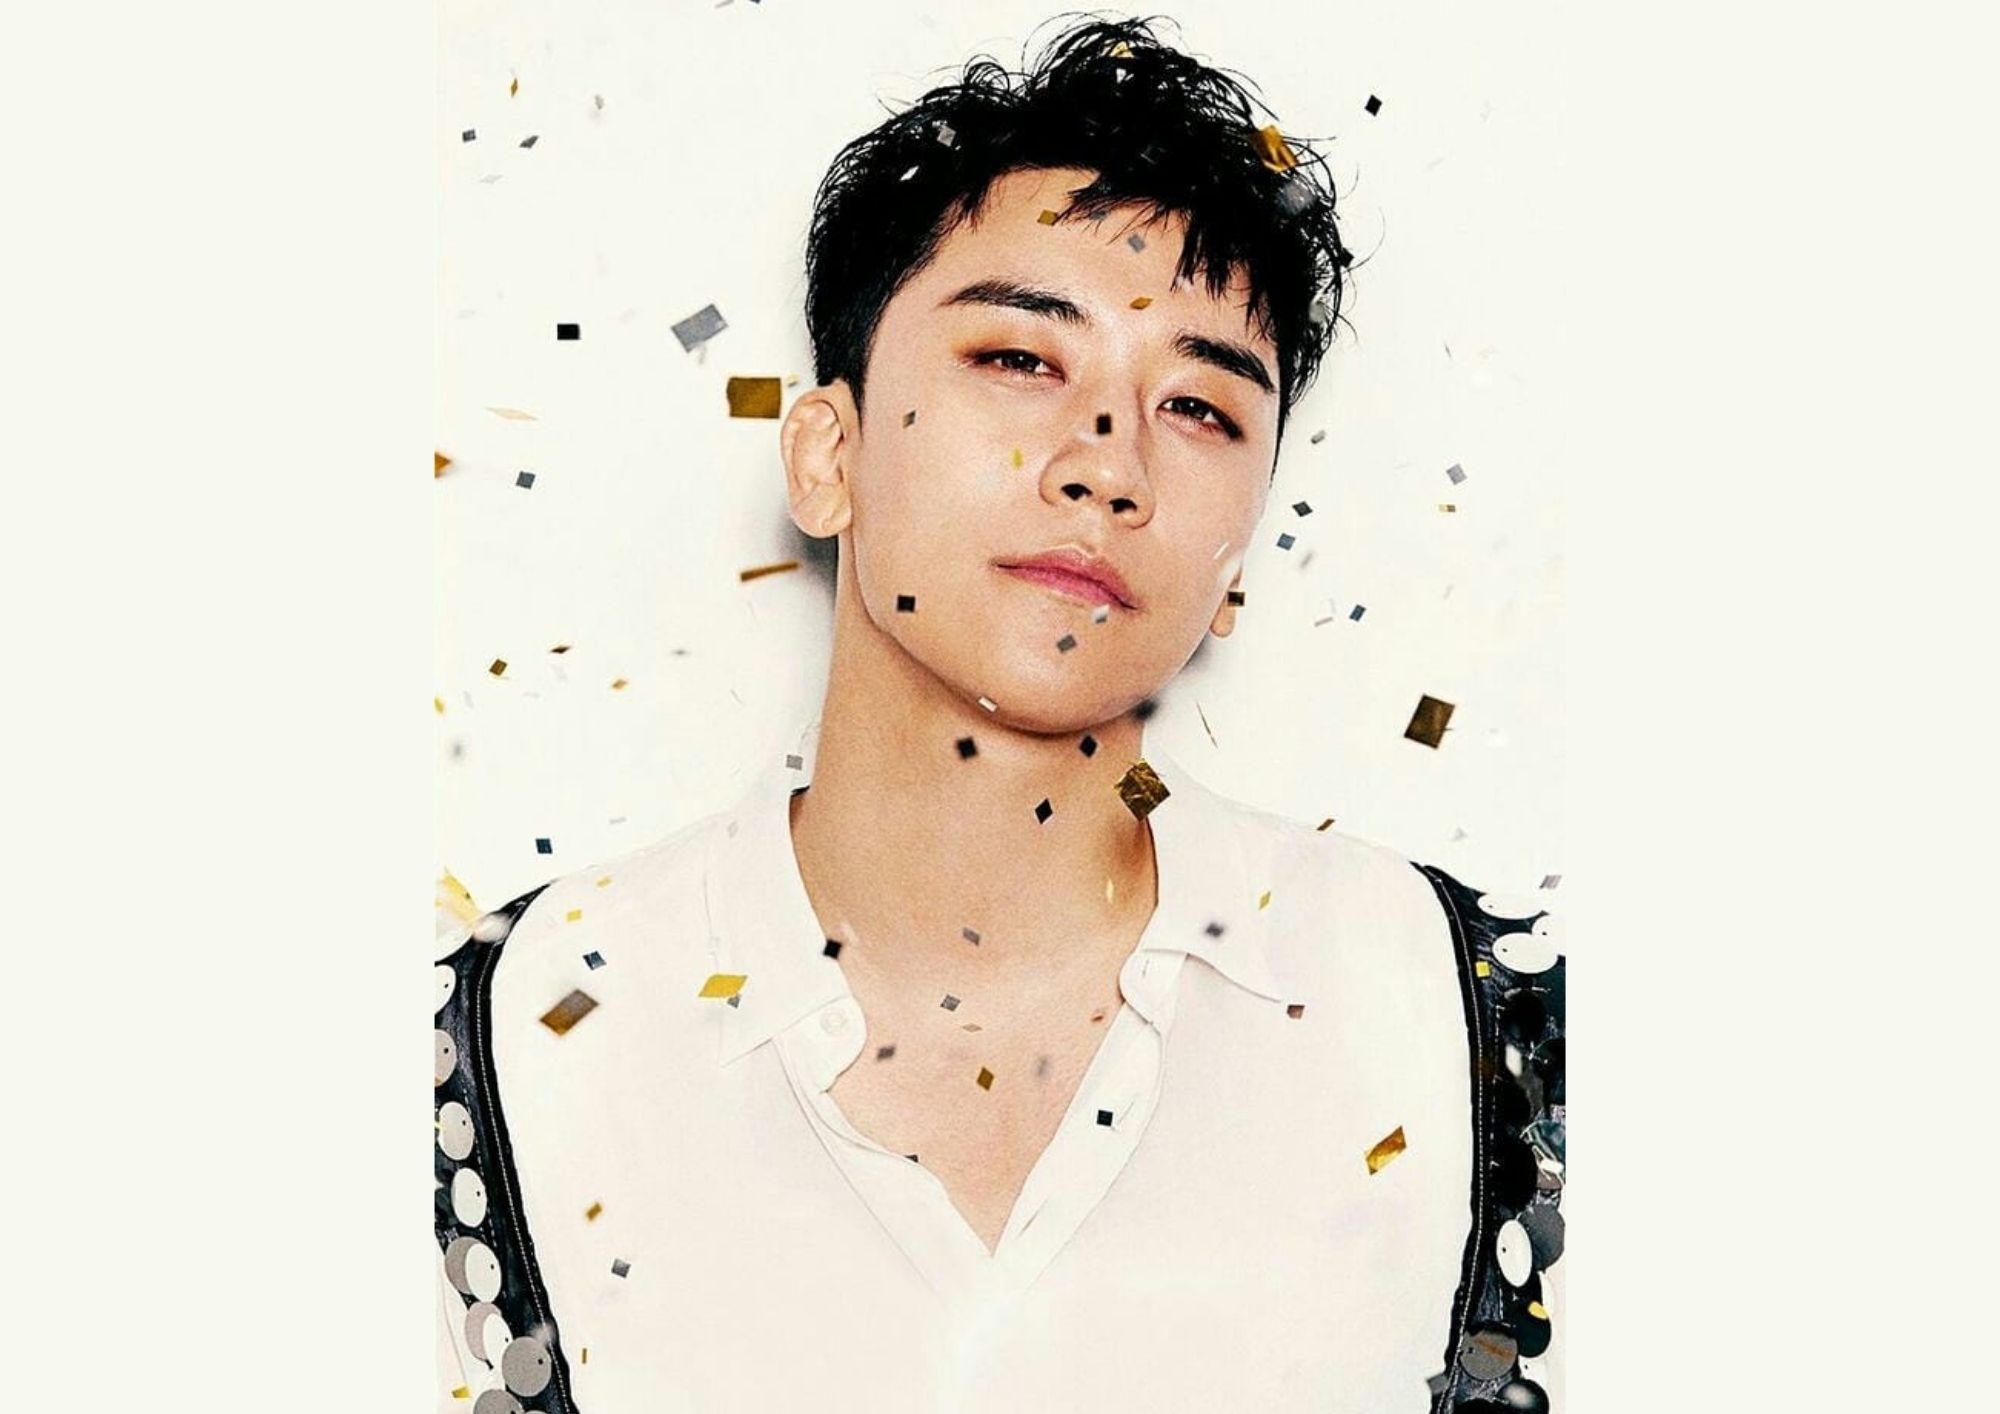 Mantan member grup BIGBANG, Seungri dijatuhi hukuman penjara satu setengah tahun